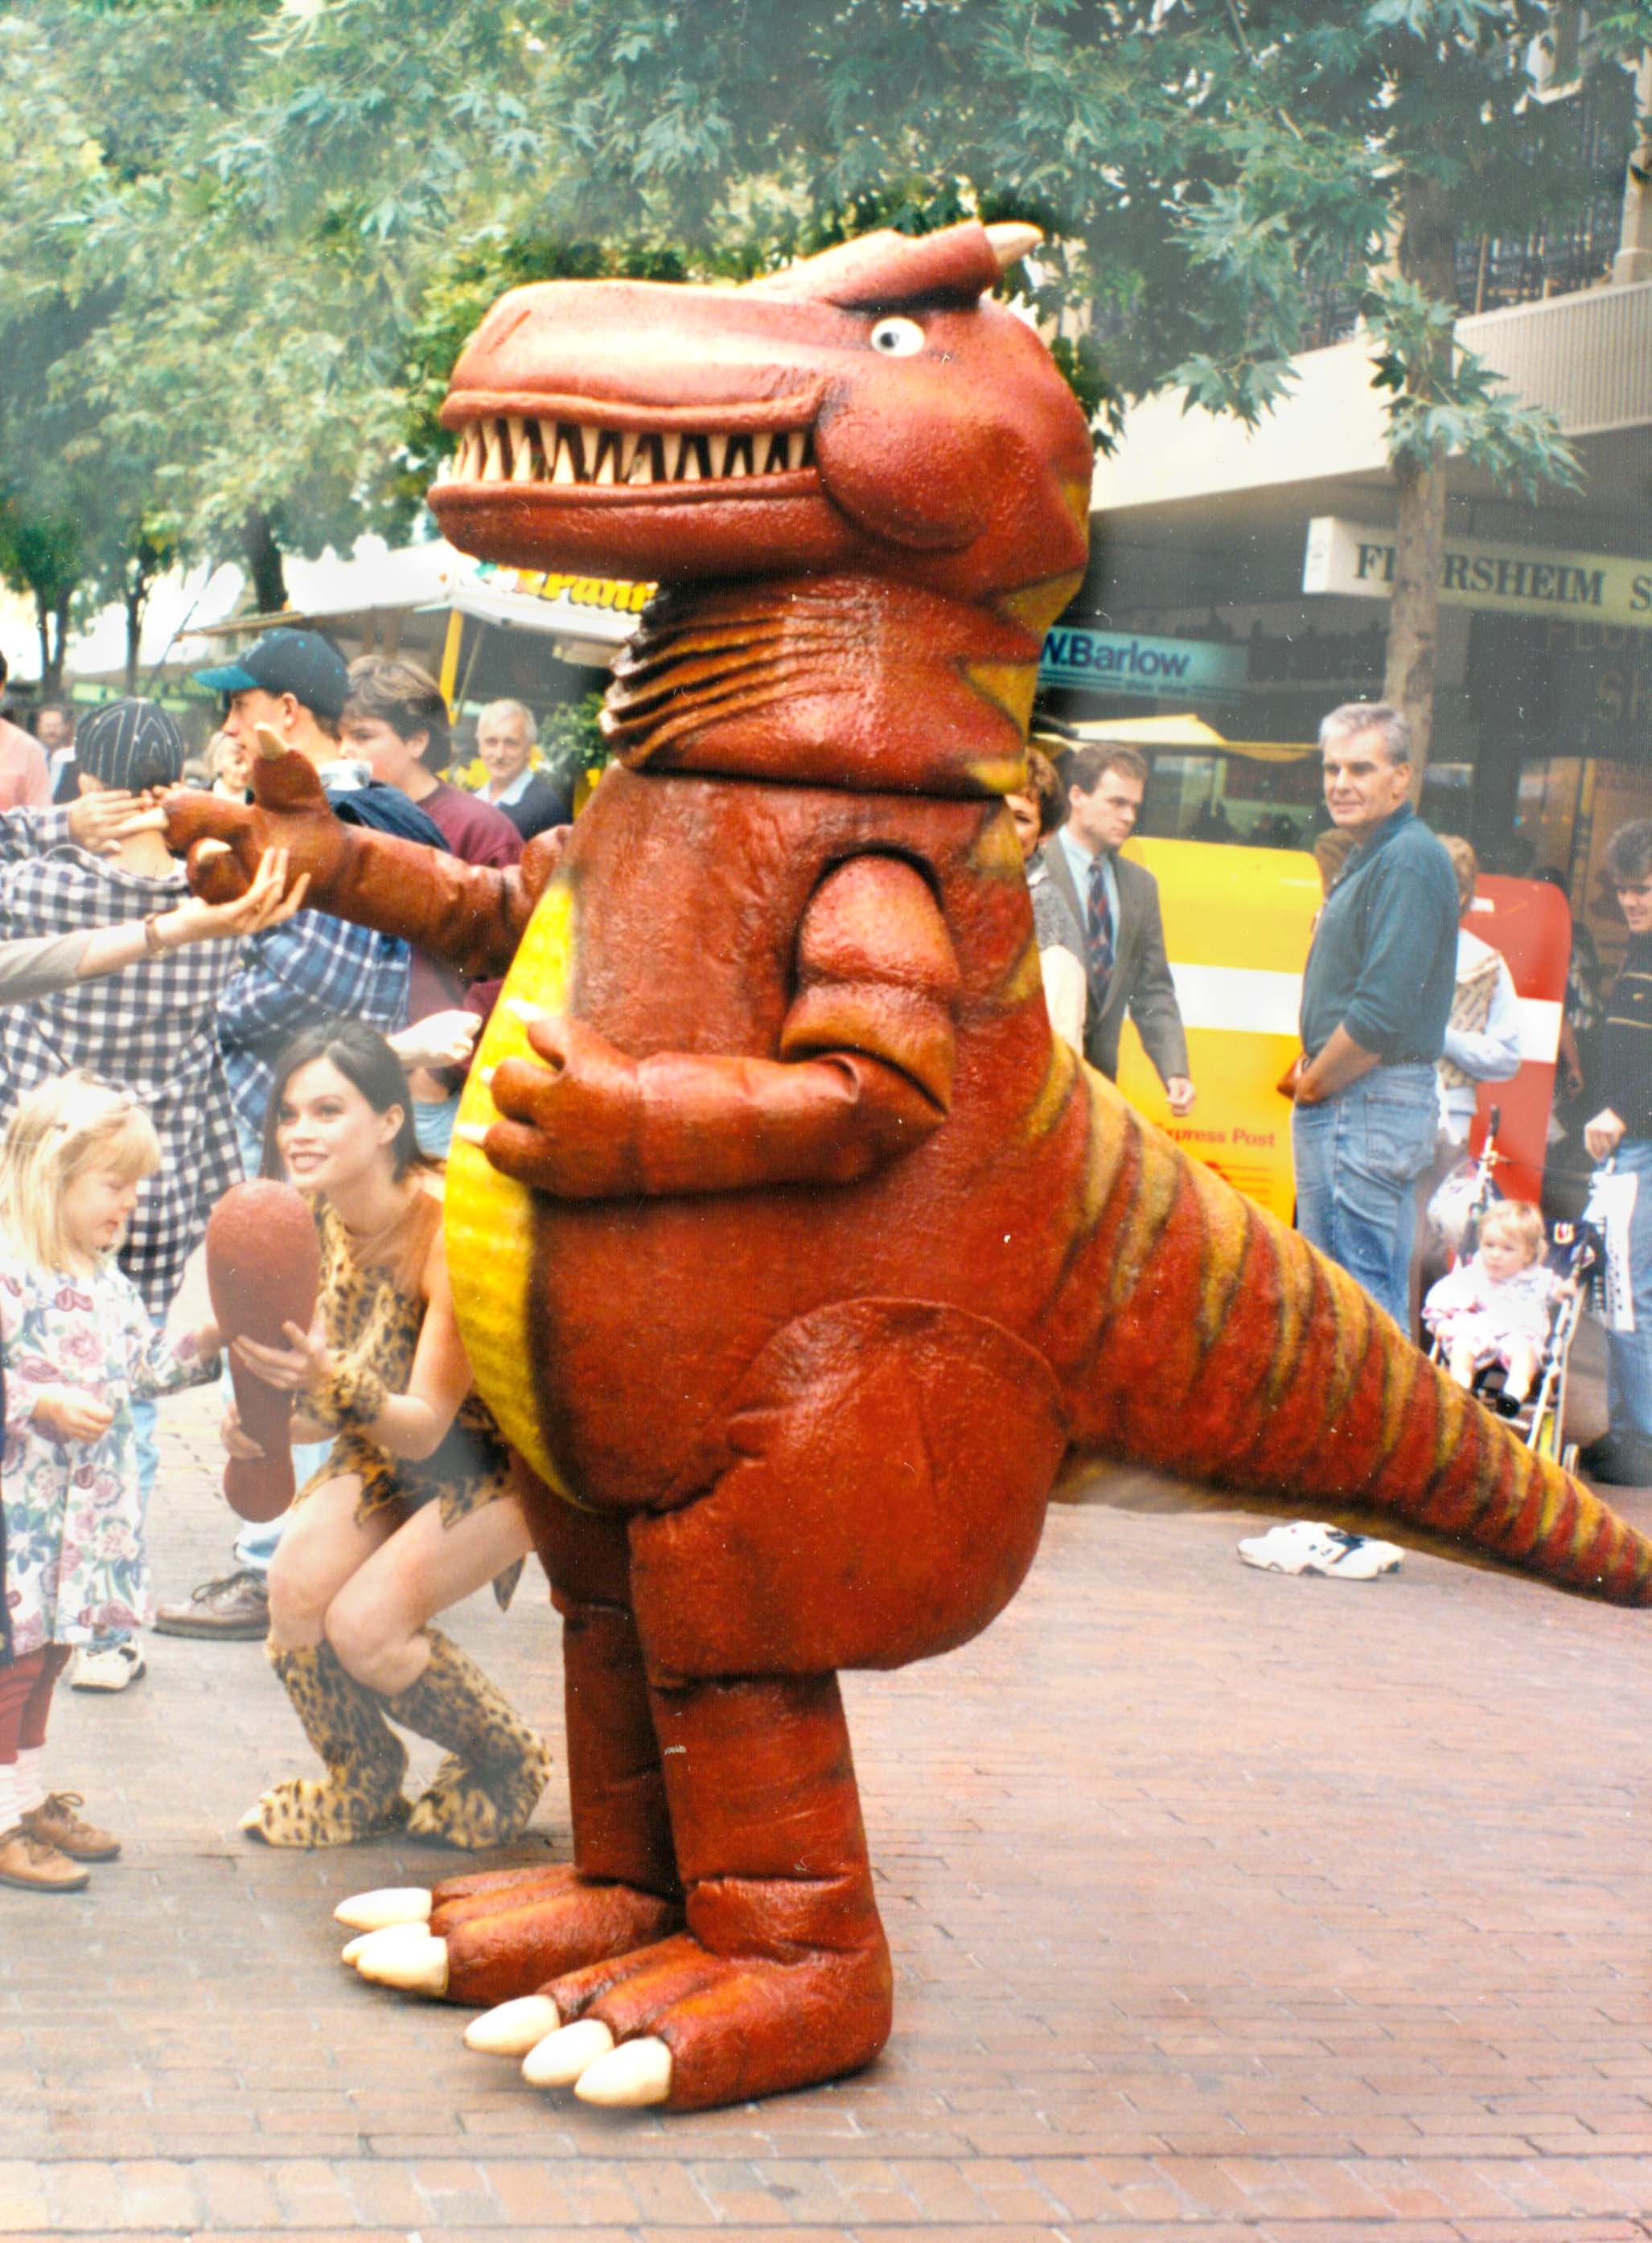 Dinosaur suit
I built for a street entertainer